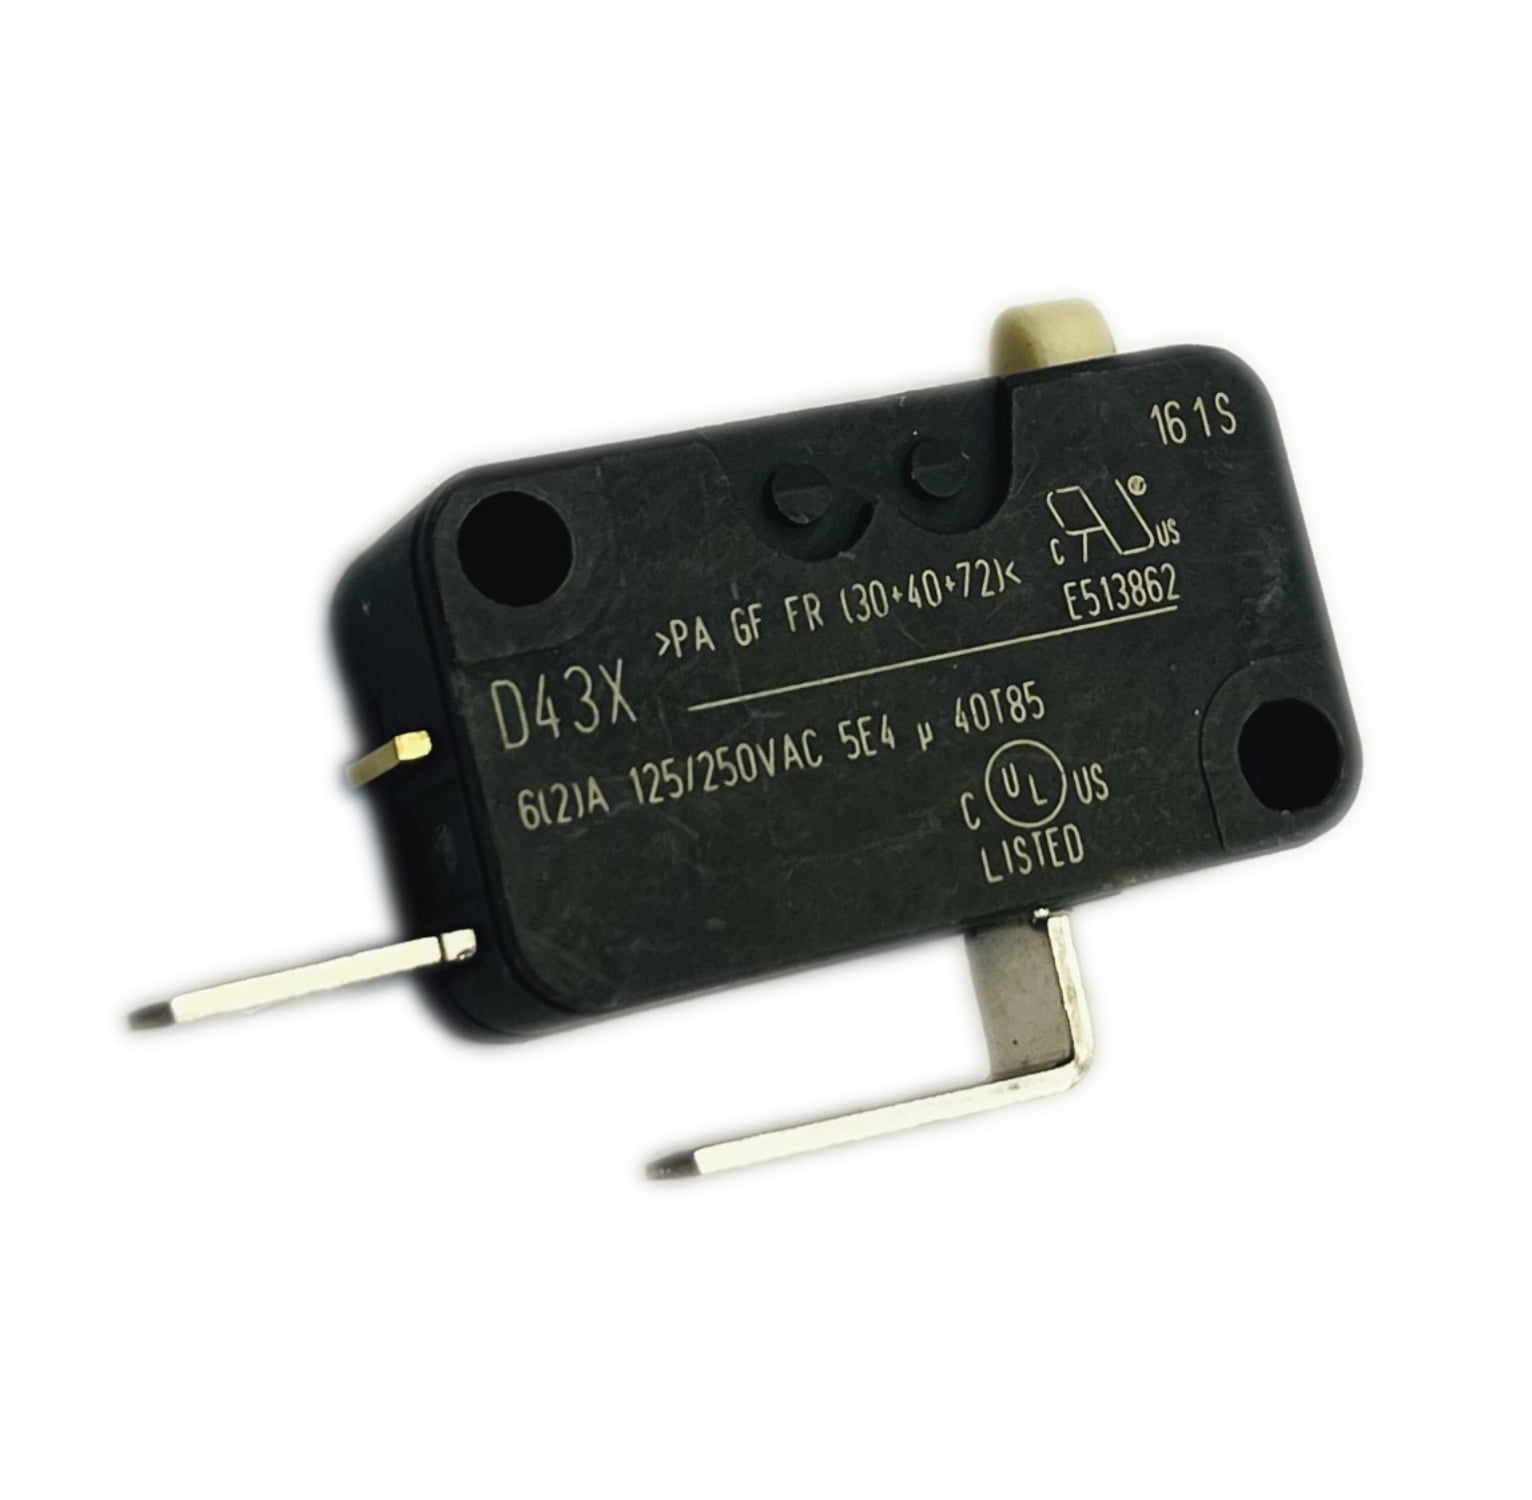 POPESQ® - 5 pcs. x Micro-Interrupteur (Interrupteur instantane) 6mm x 6mm 6  Voies THT / 5 pcs. x Micro Switch (Momentary Switch) 6mm x 6mm 6 Way THT